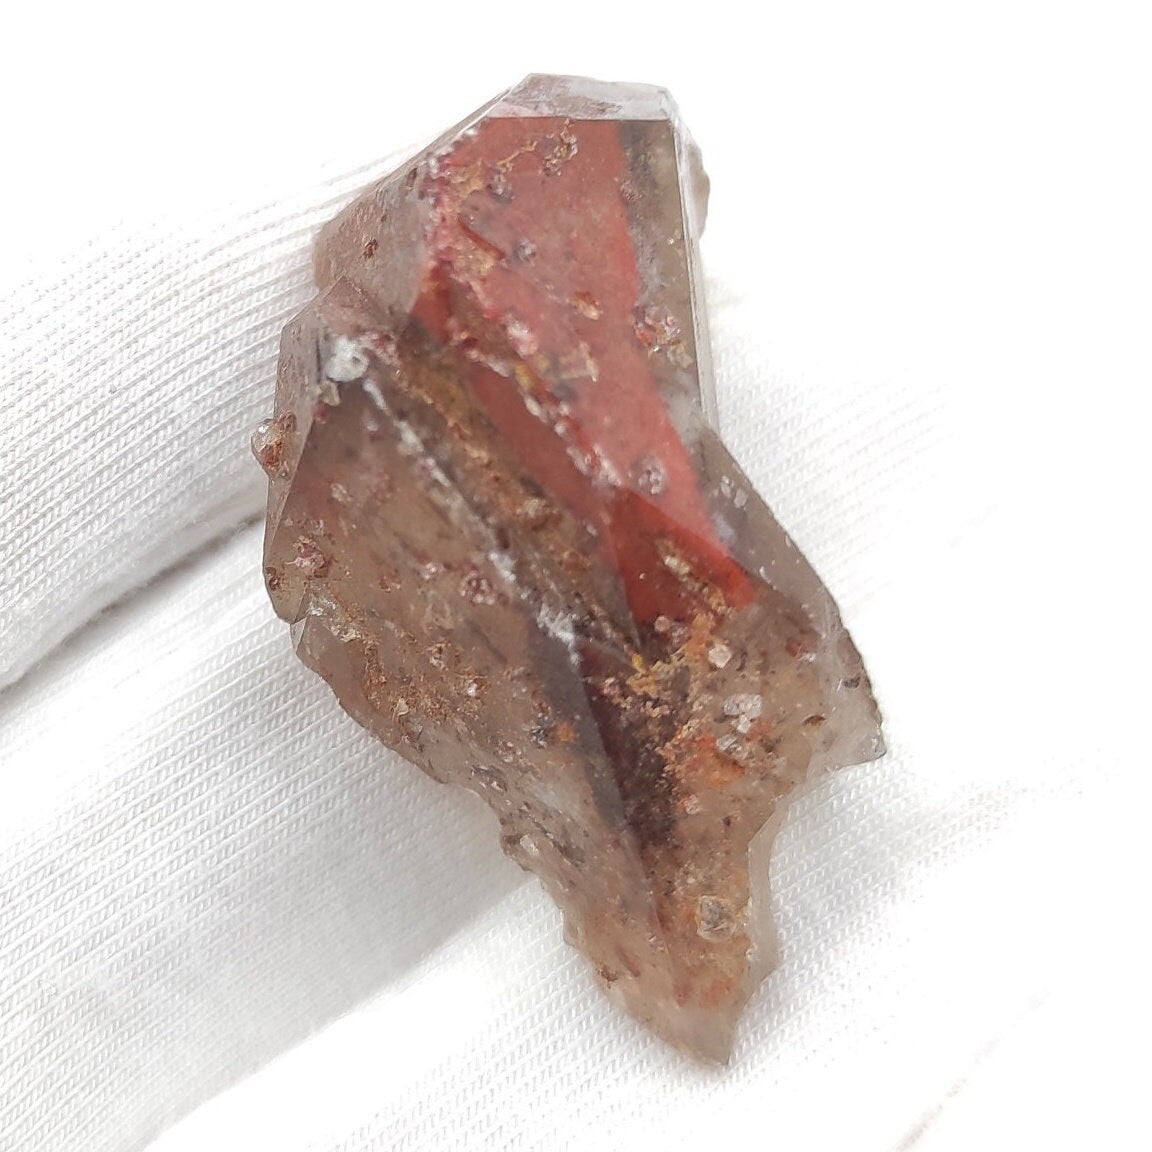 9g Mini Thunder Bay Smoky Amethyst - Dark Hematite Amethyst - Canadian Amethyst Crystal - Hematite Included - Mini Small Pocket Crystals